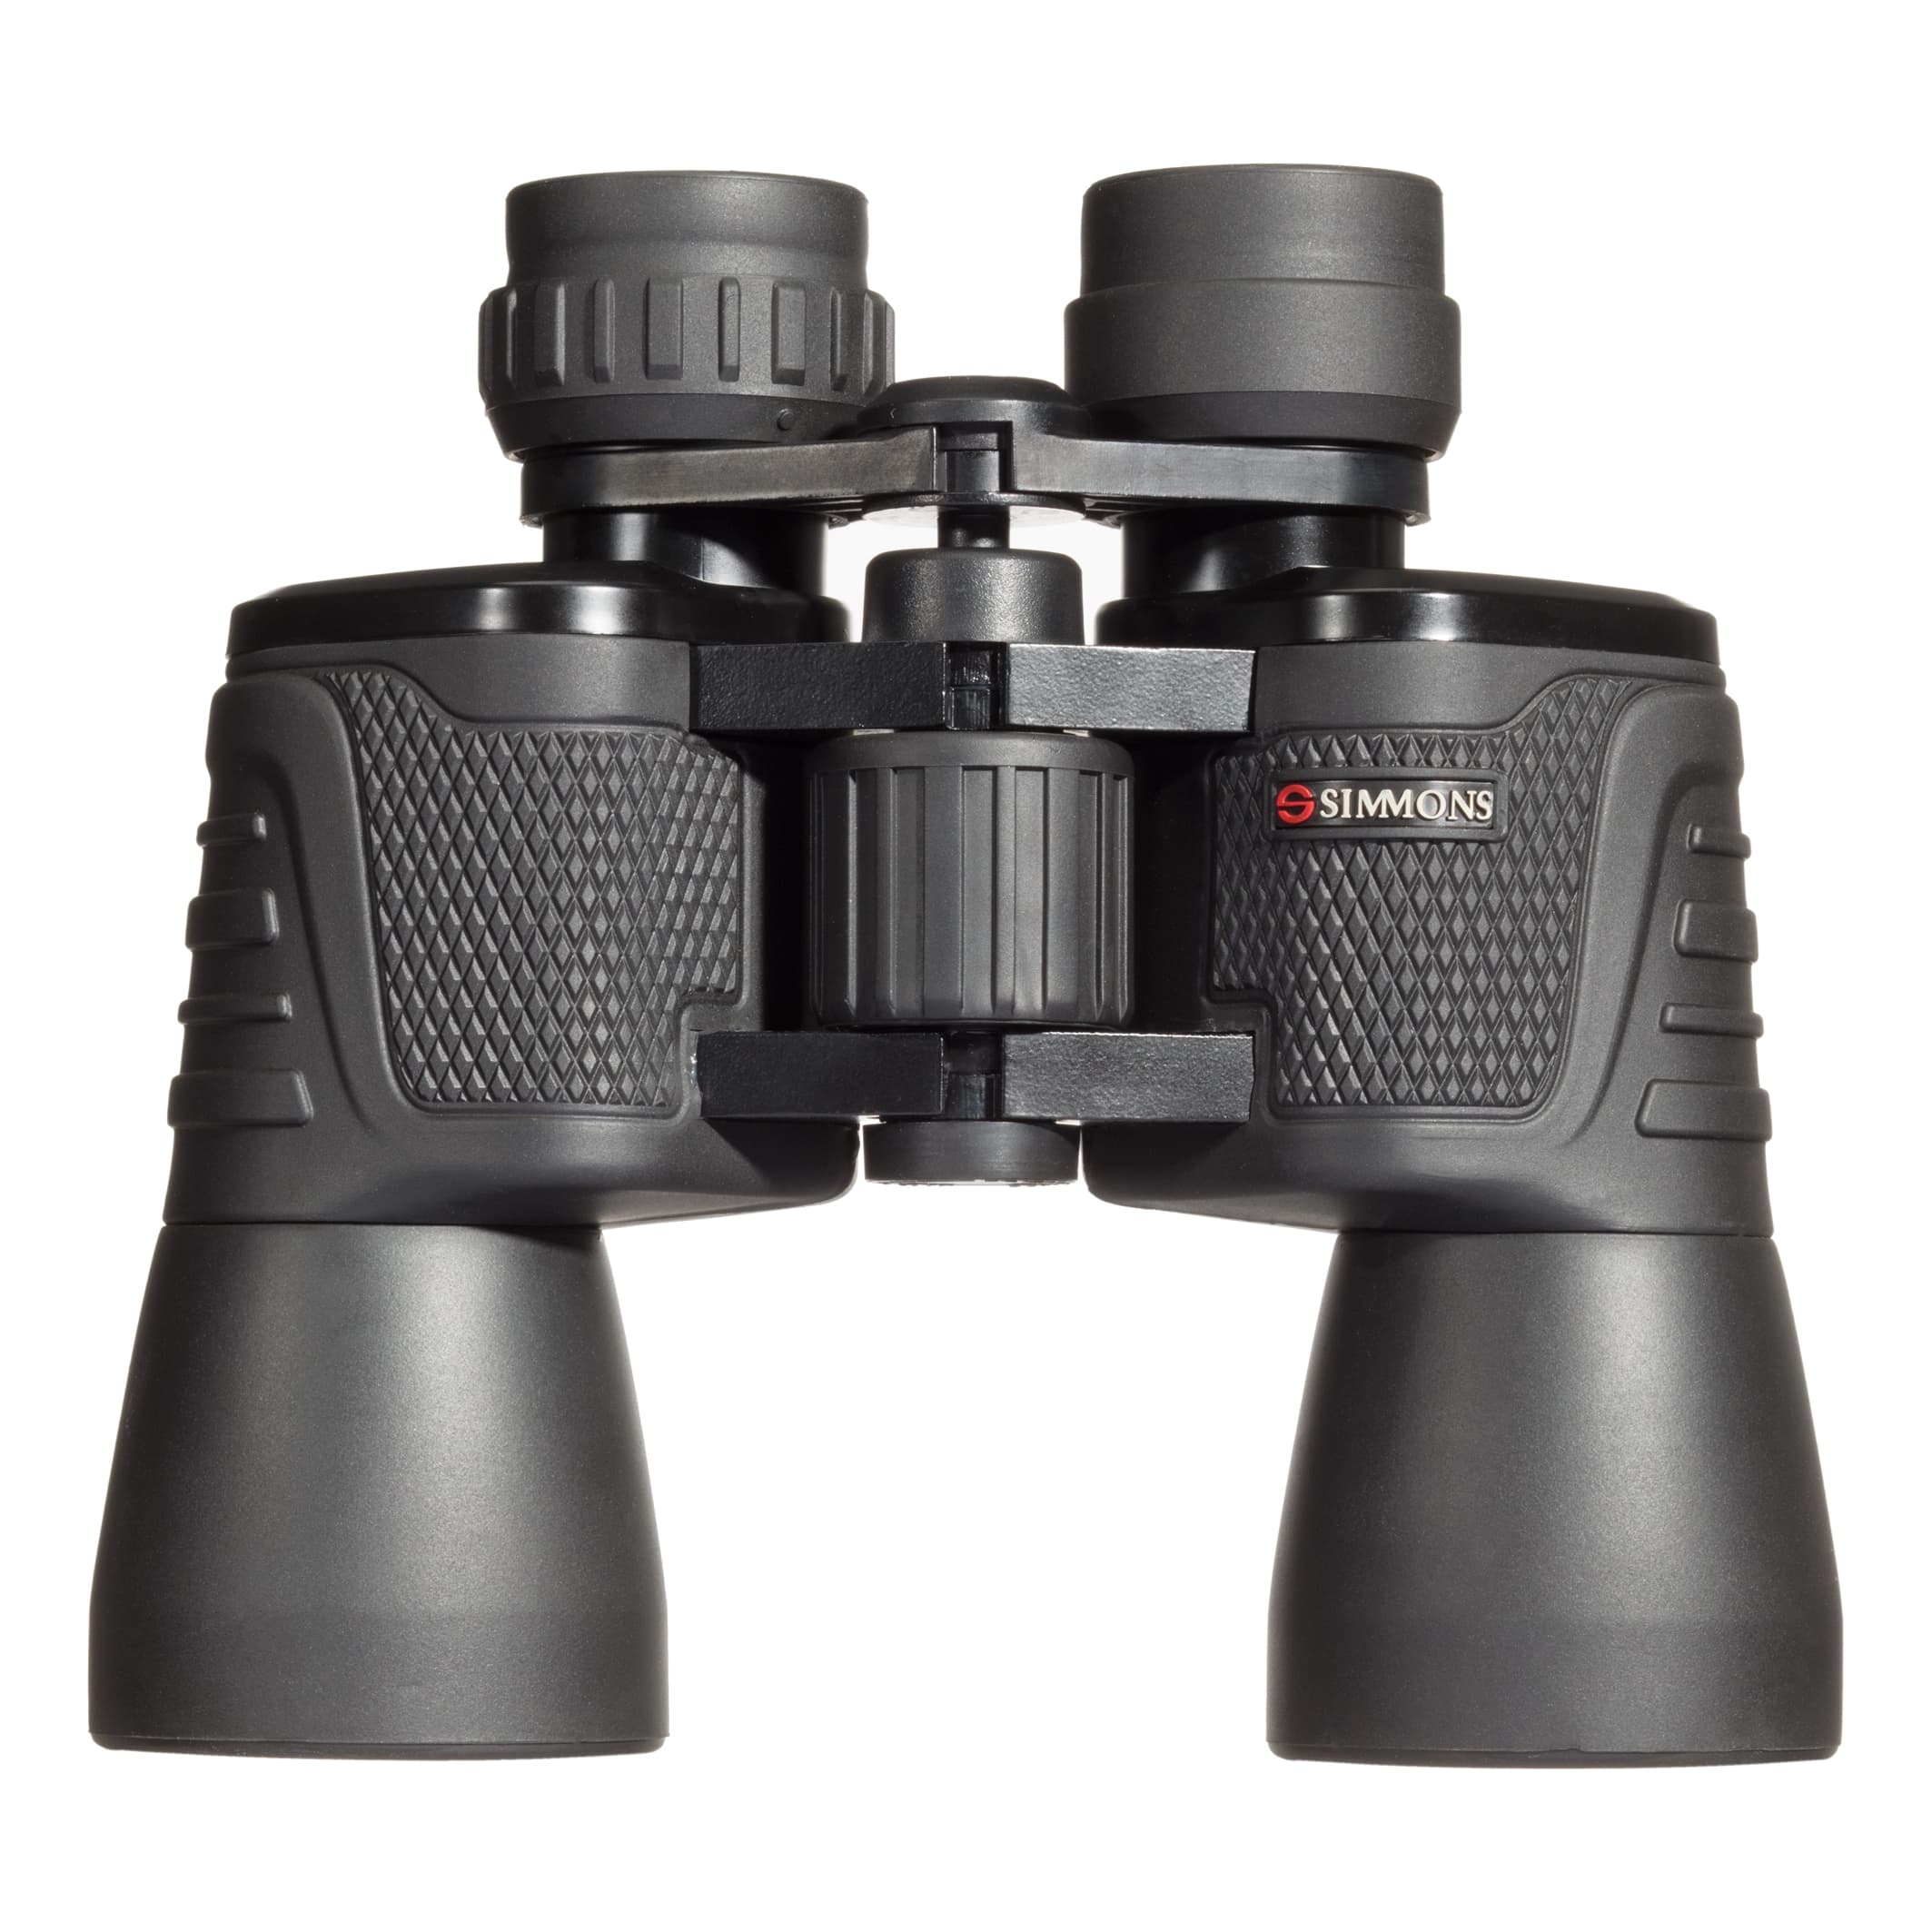 Simmons® ProSport Binoculars - top